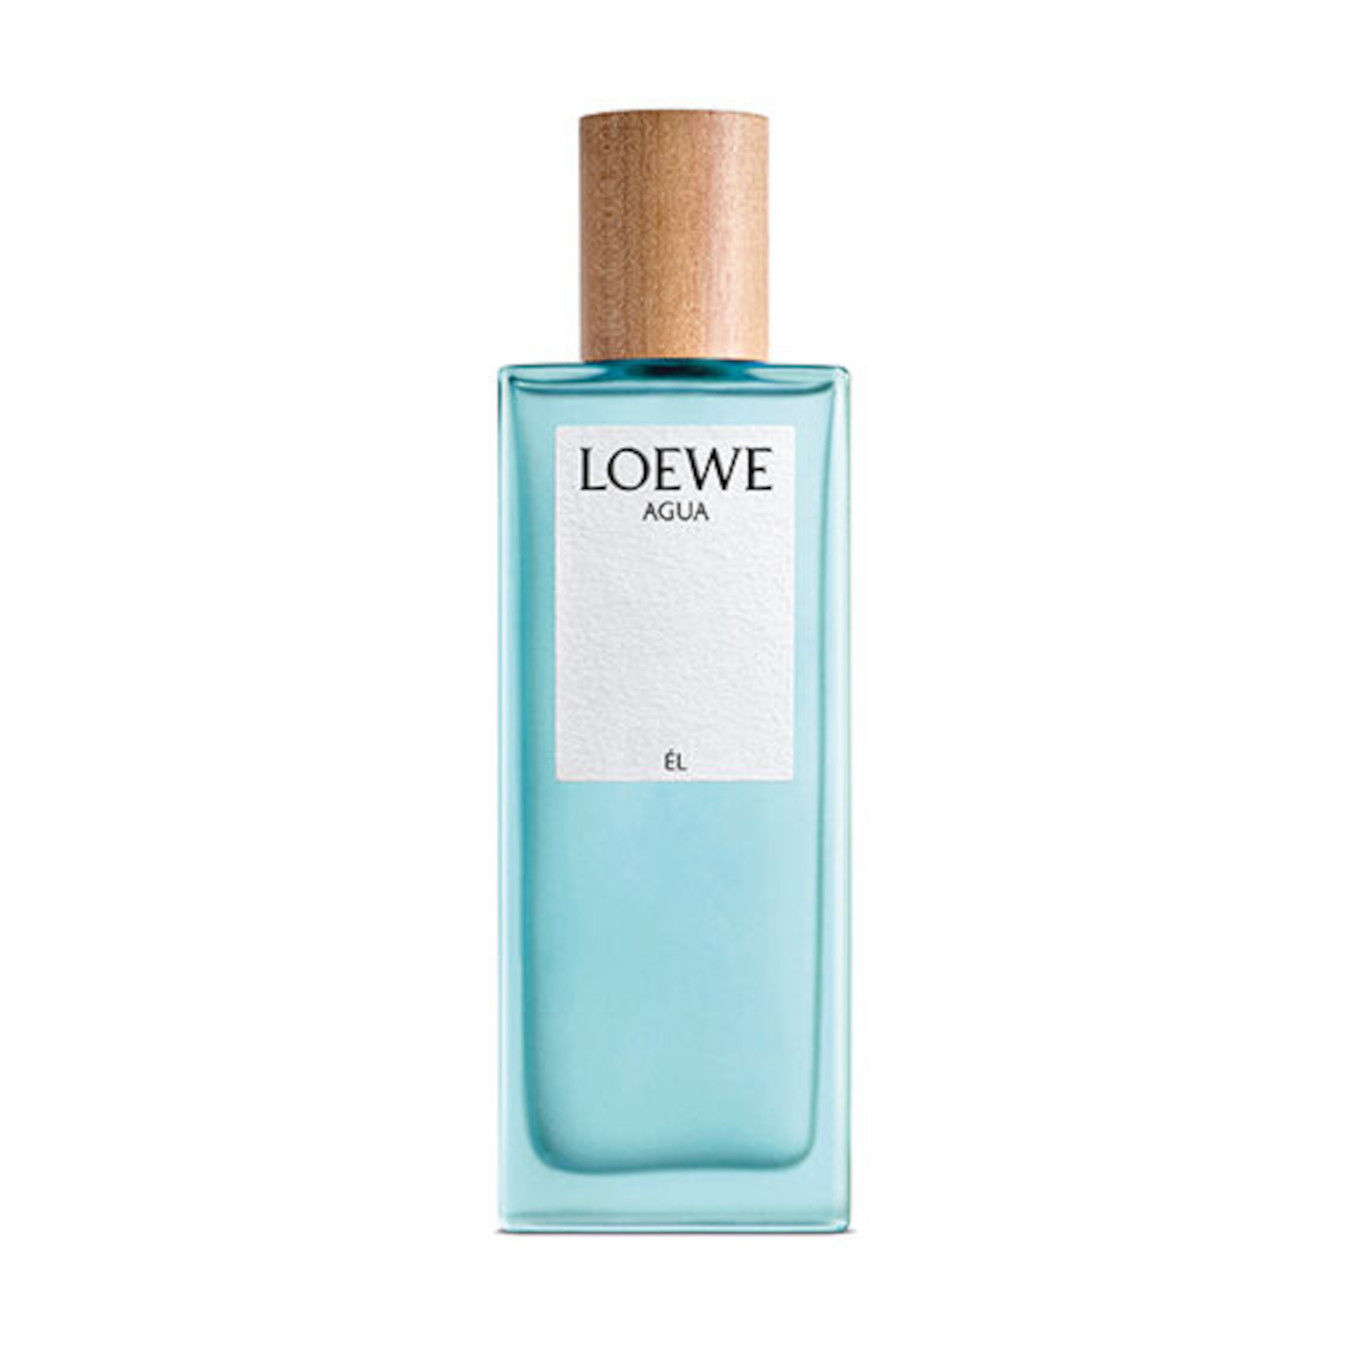 Loewe Agua ÉL Eau de Toilette 50ml Herren von Loewe